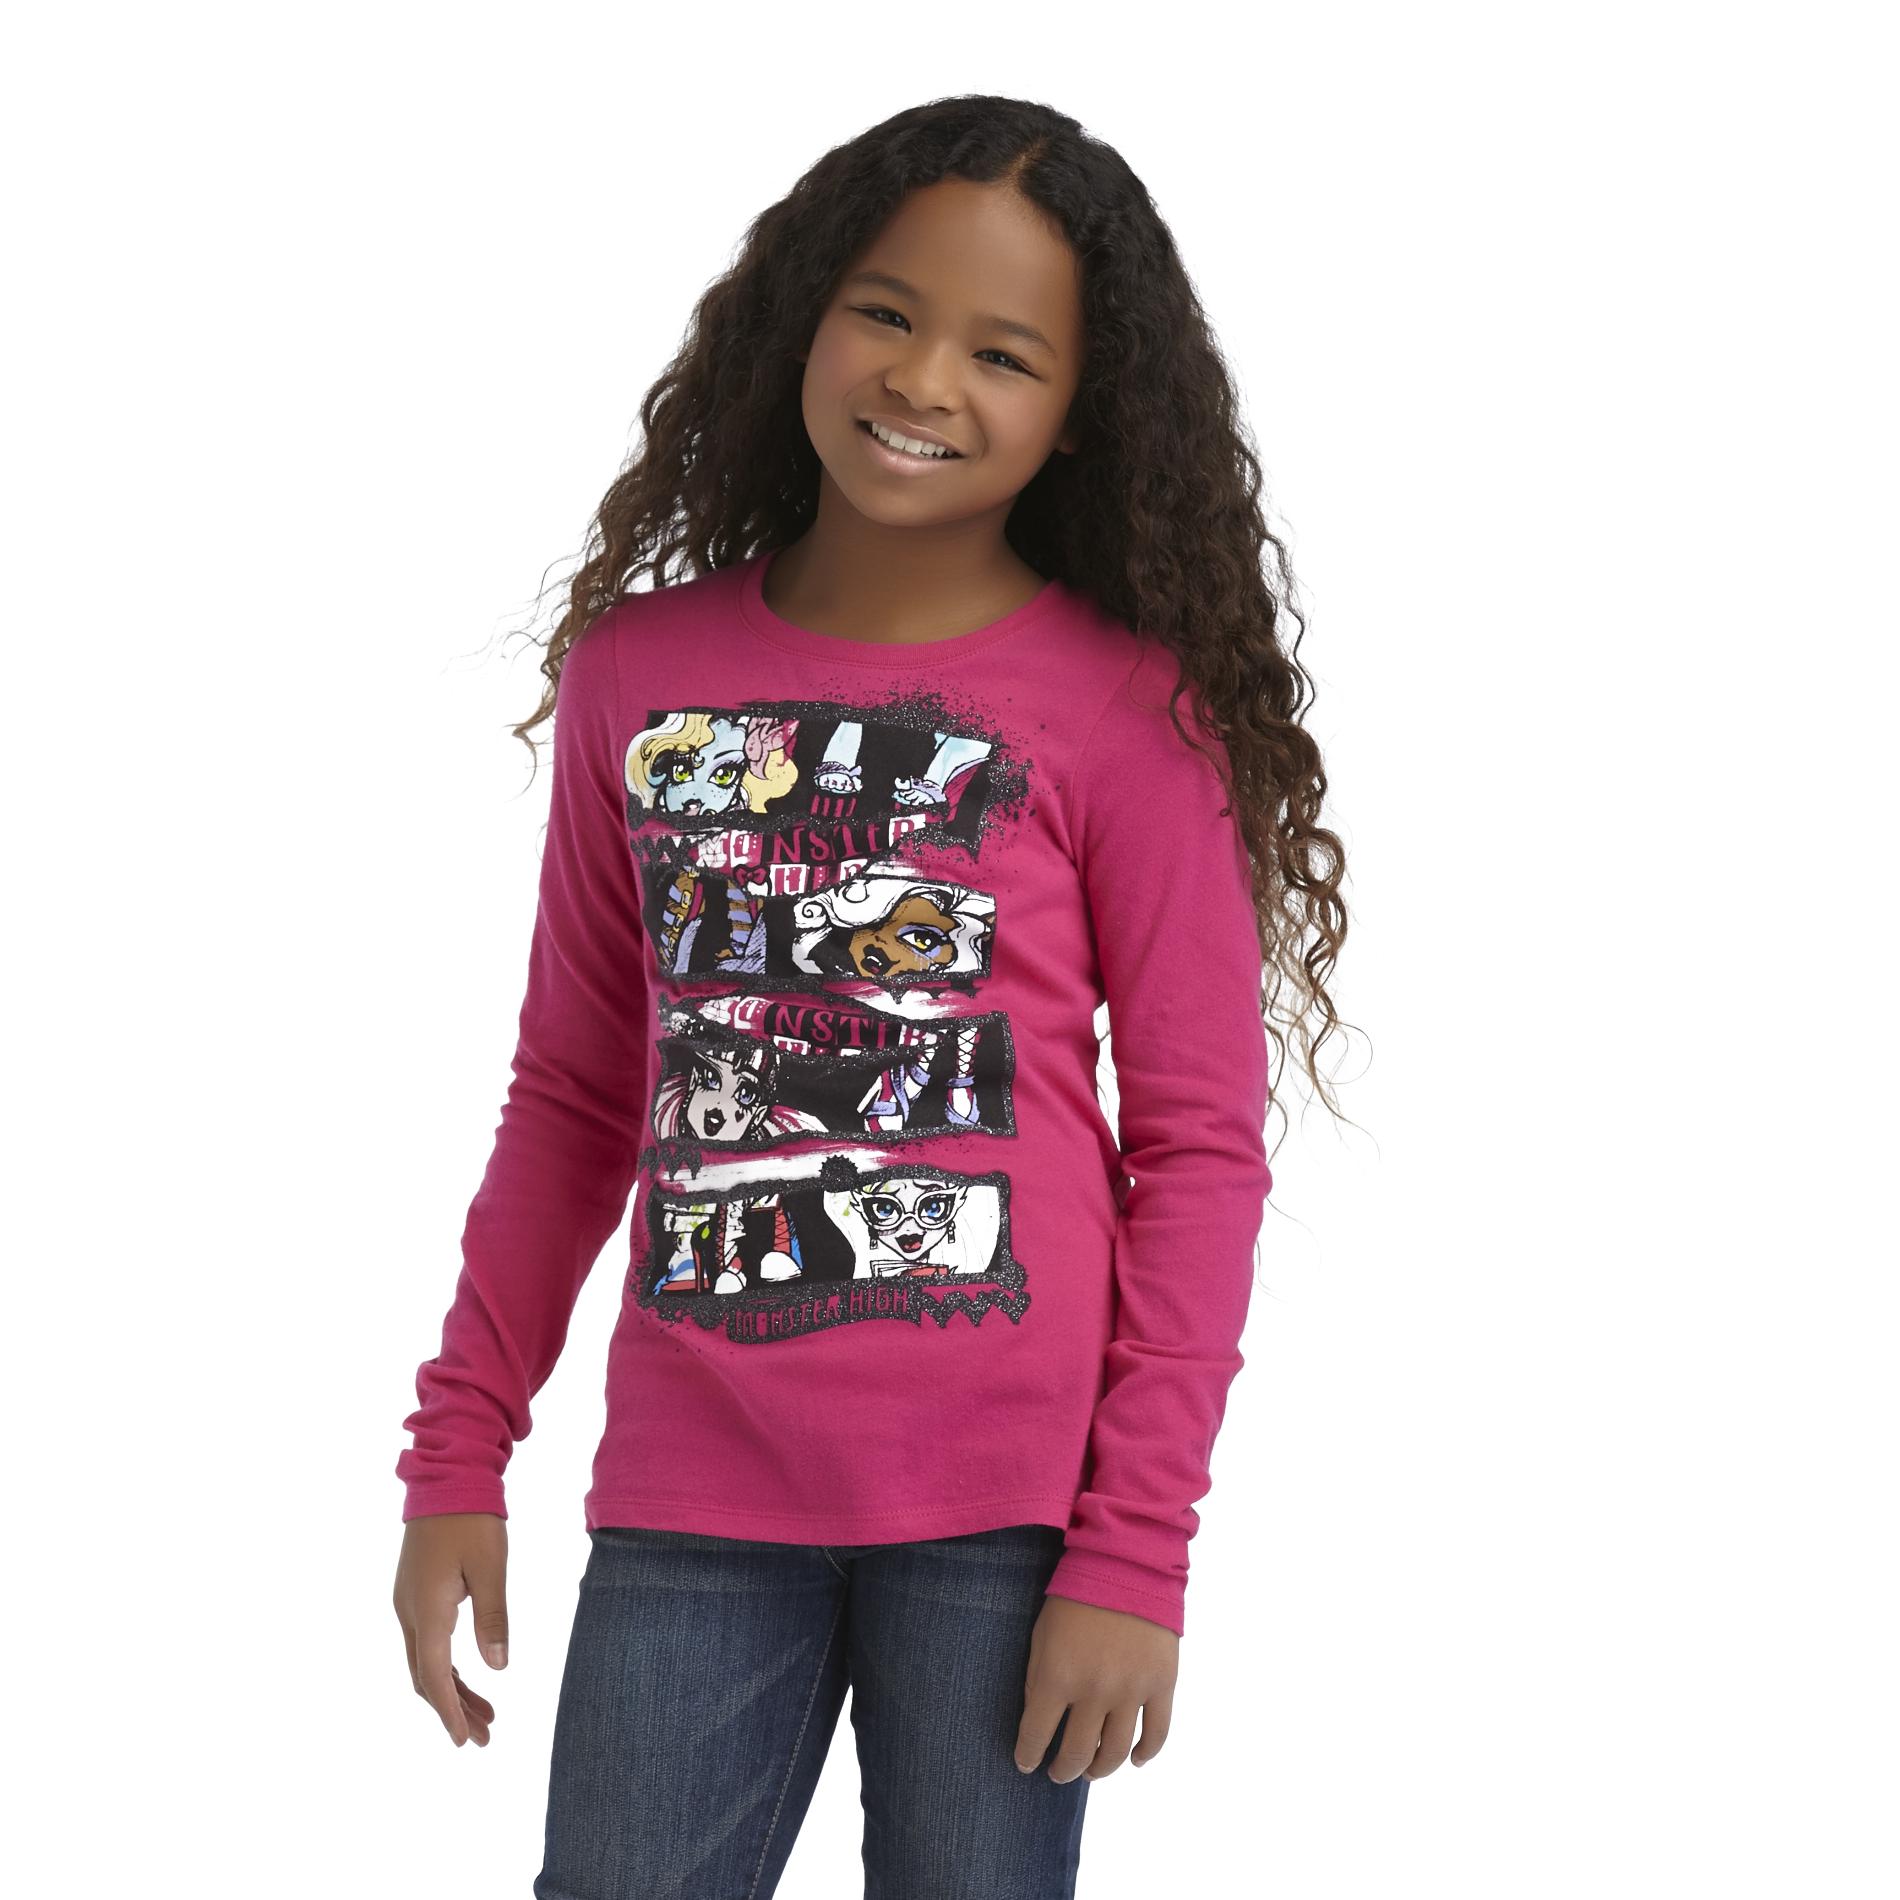 Monster High Girl's Long-Sleeve Graphic T-Shirt